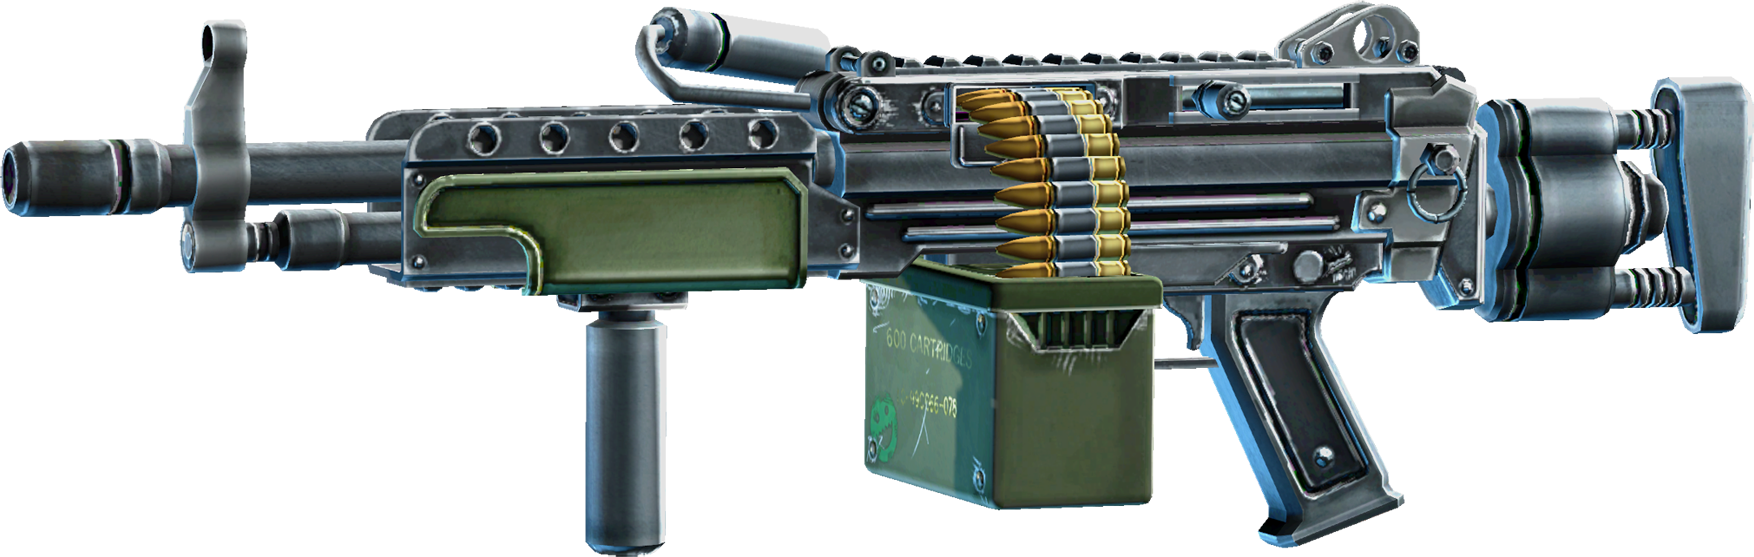 Sriv Rifles   Automatic Rifle   Mercenary Lmg   Default.png - Big Guns, Transparent background PNG HD thumbnail